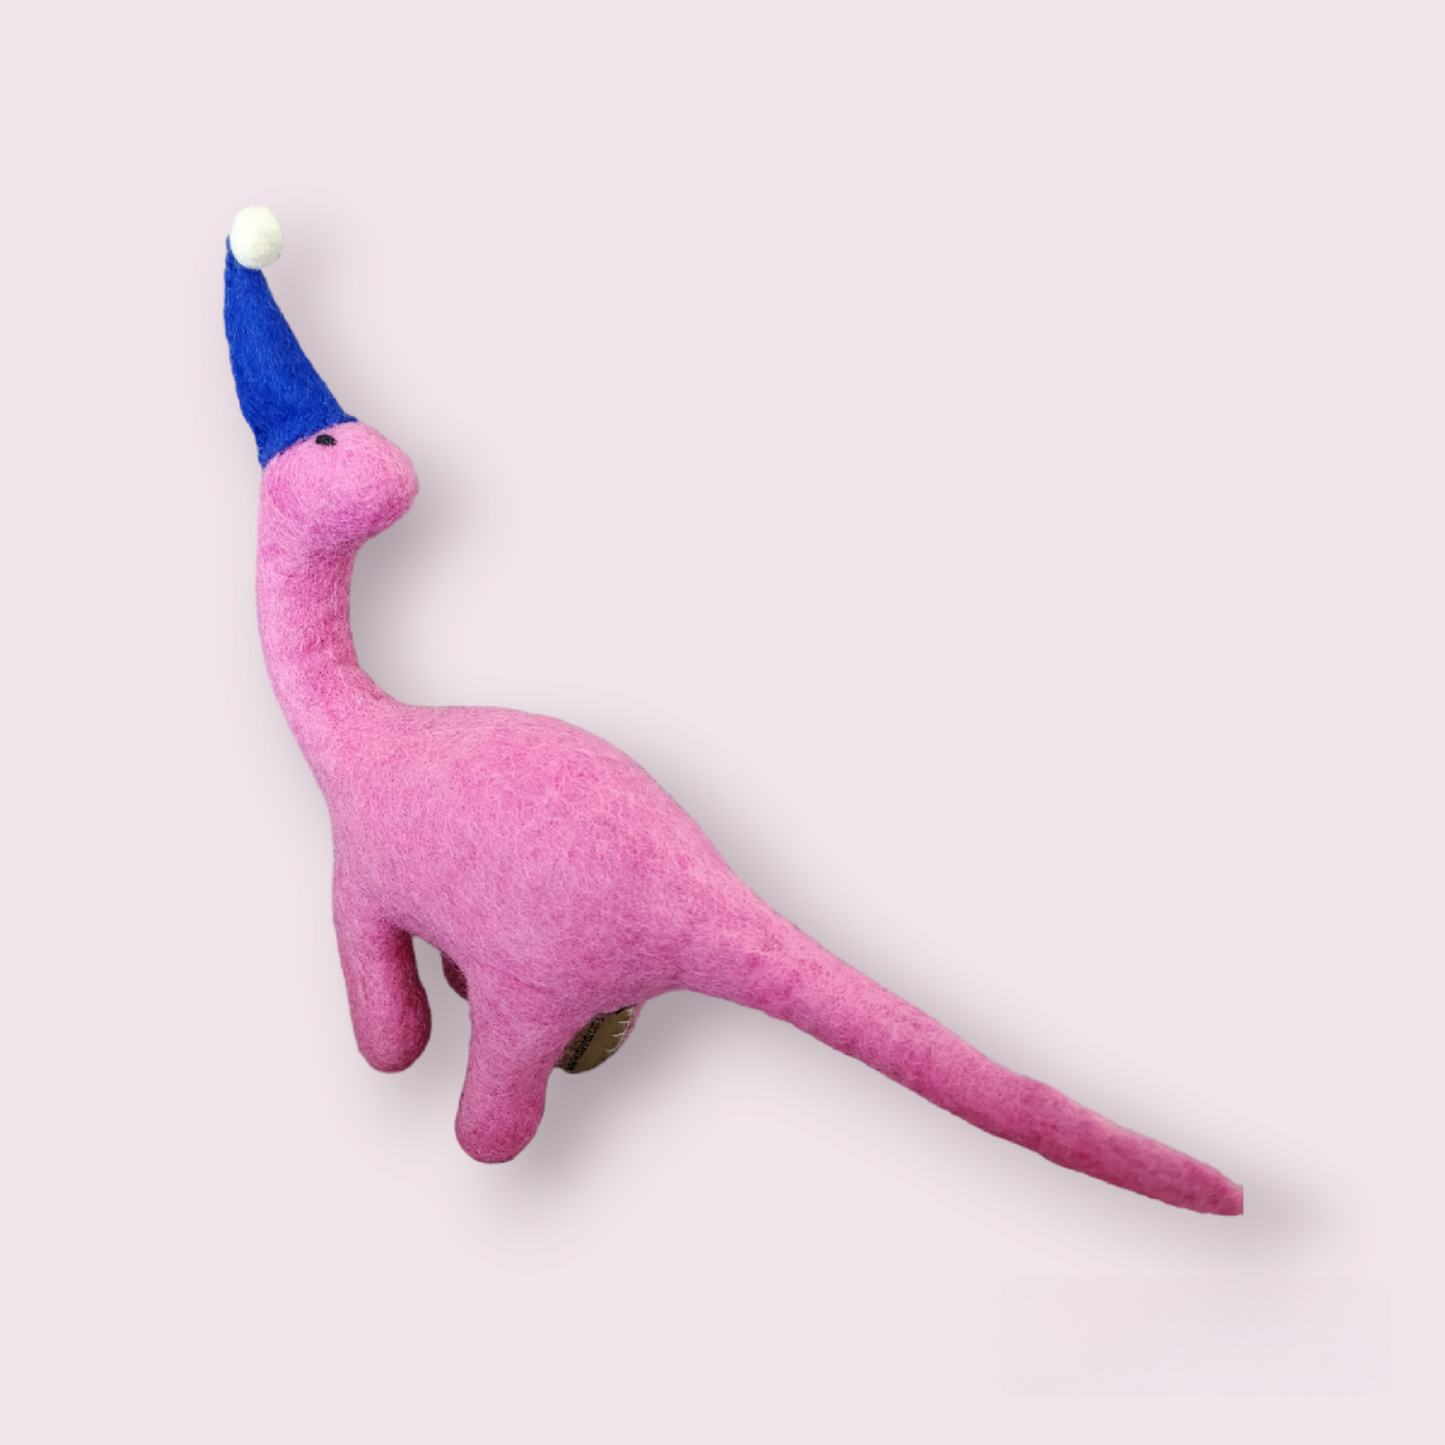 Dashdu Large Felt Dinosaur in hat